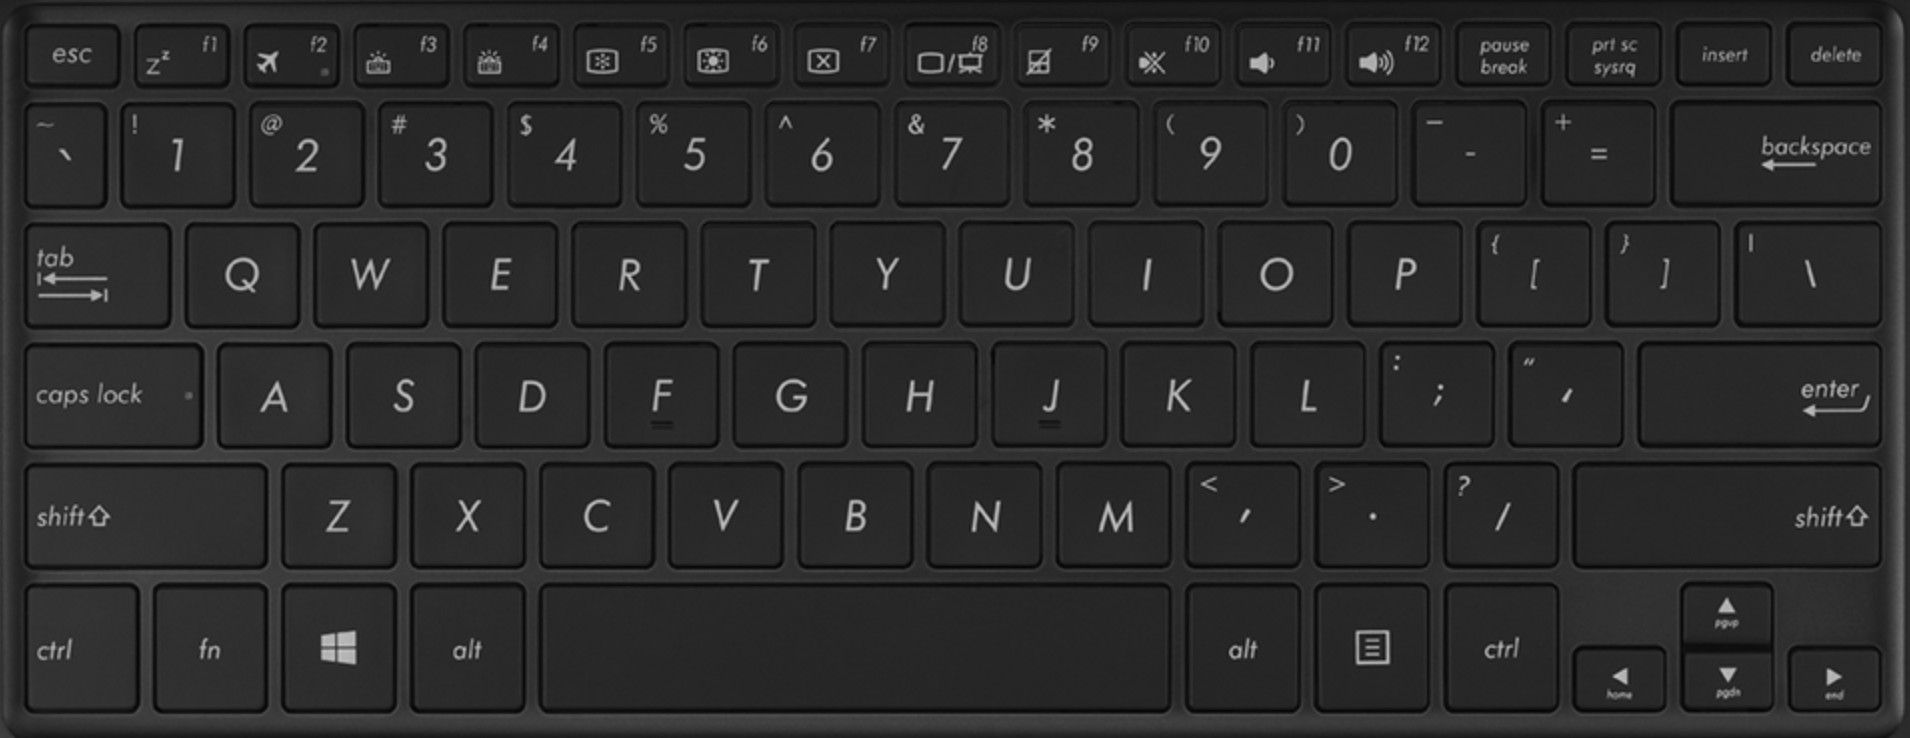 asus-Q303UA-keyboard-key-replacement.jpg